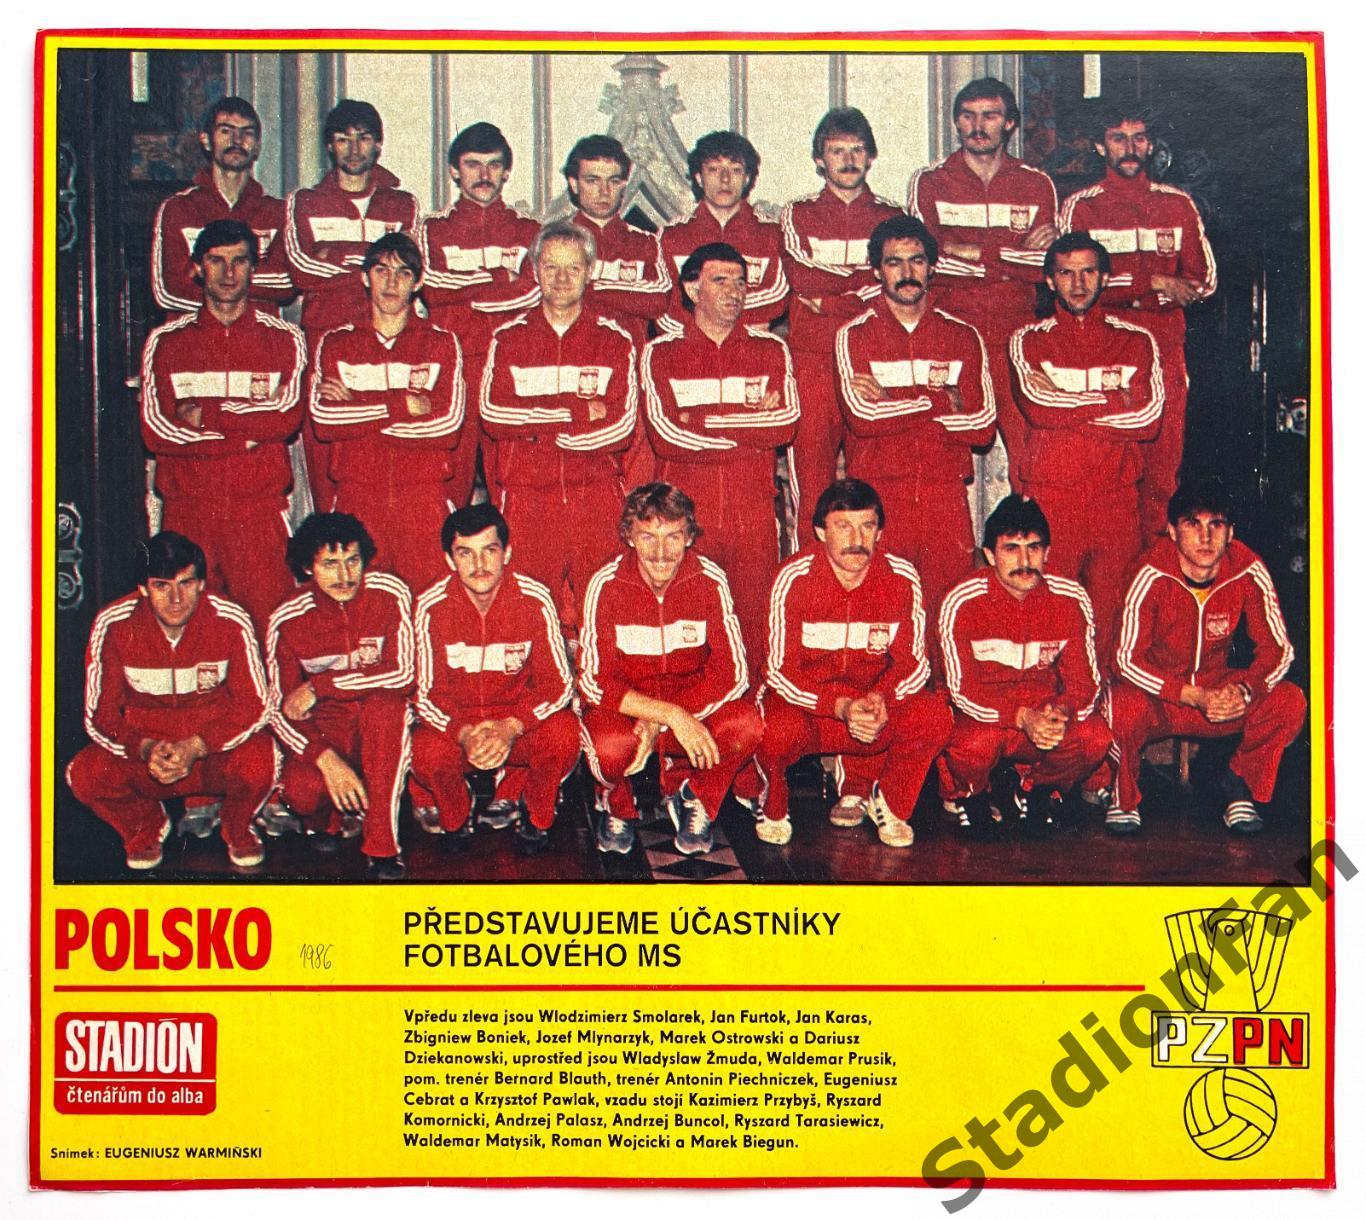 Постер из журнала Стадион (Stadion) - Polsko, 1986